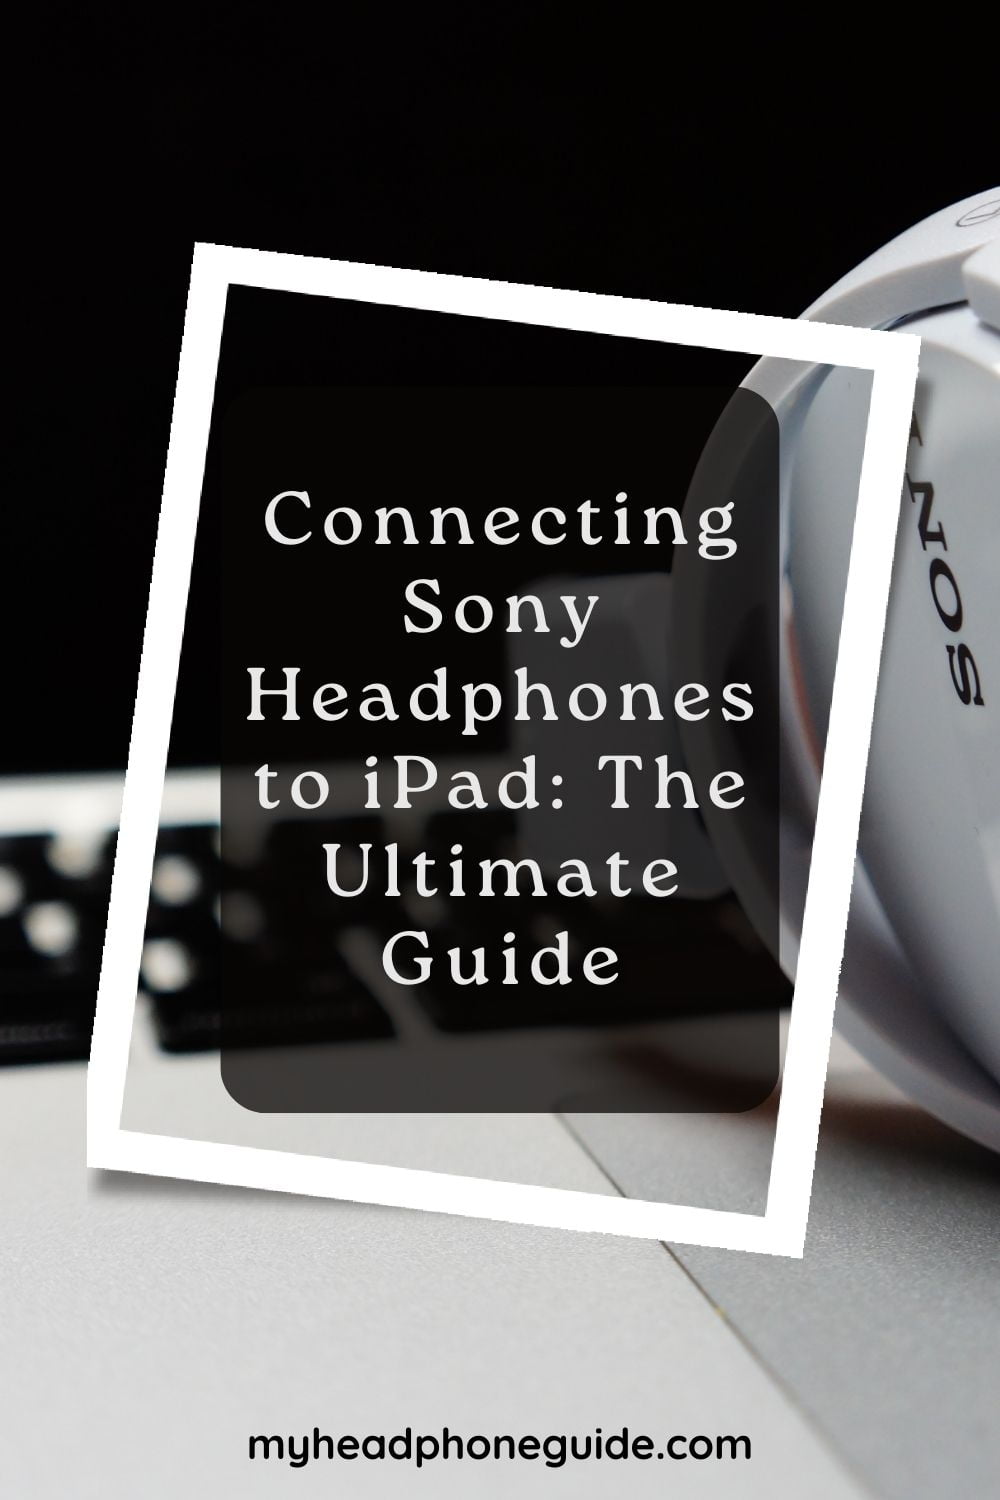 How to Connect Sony Headphones to iPad